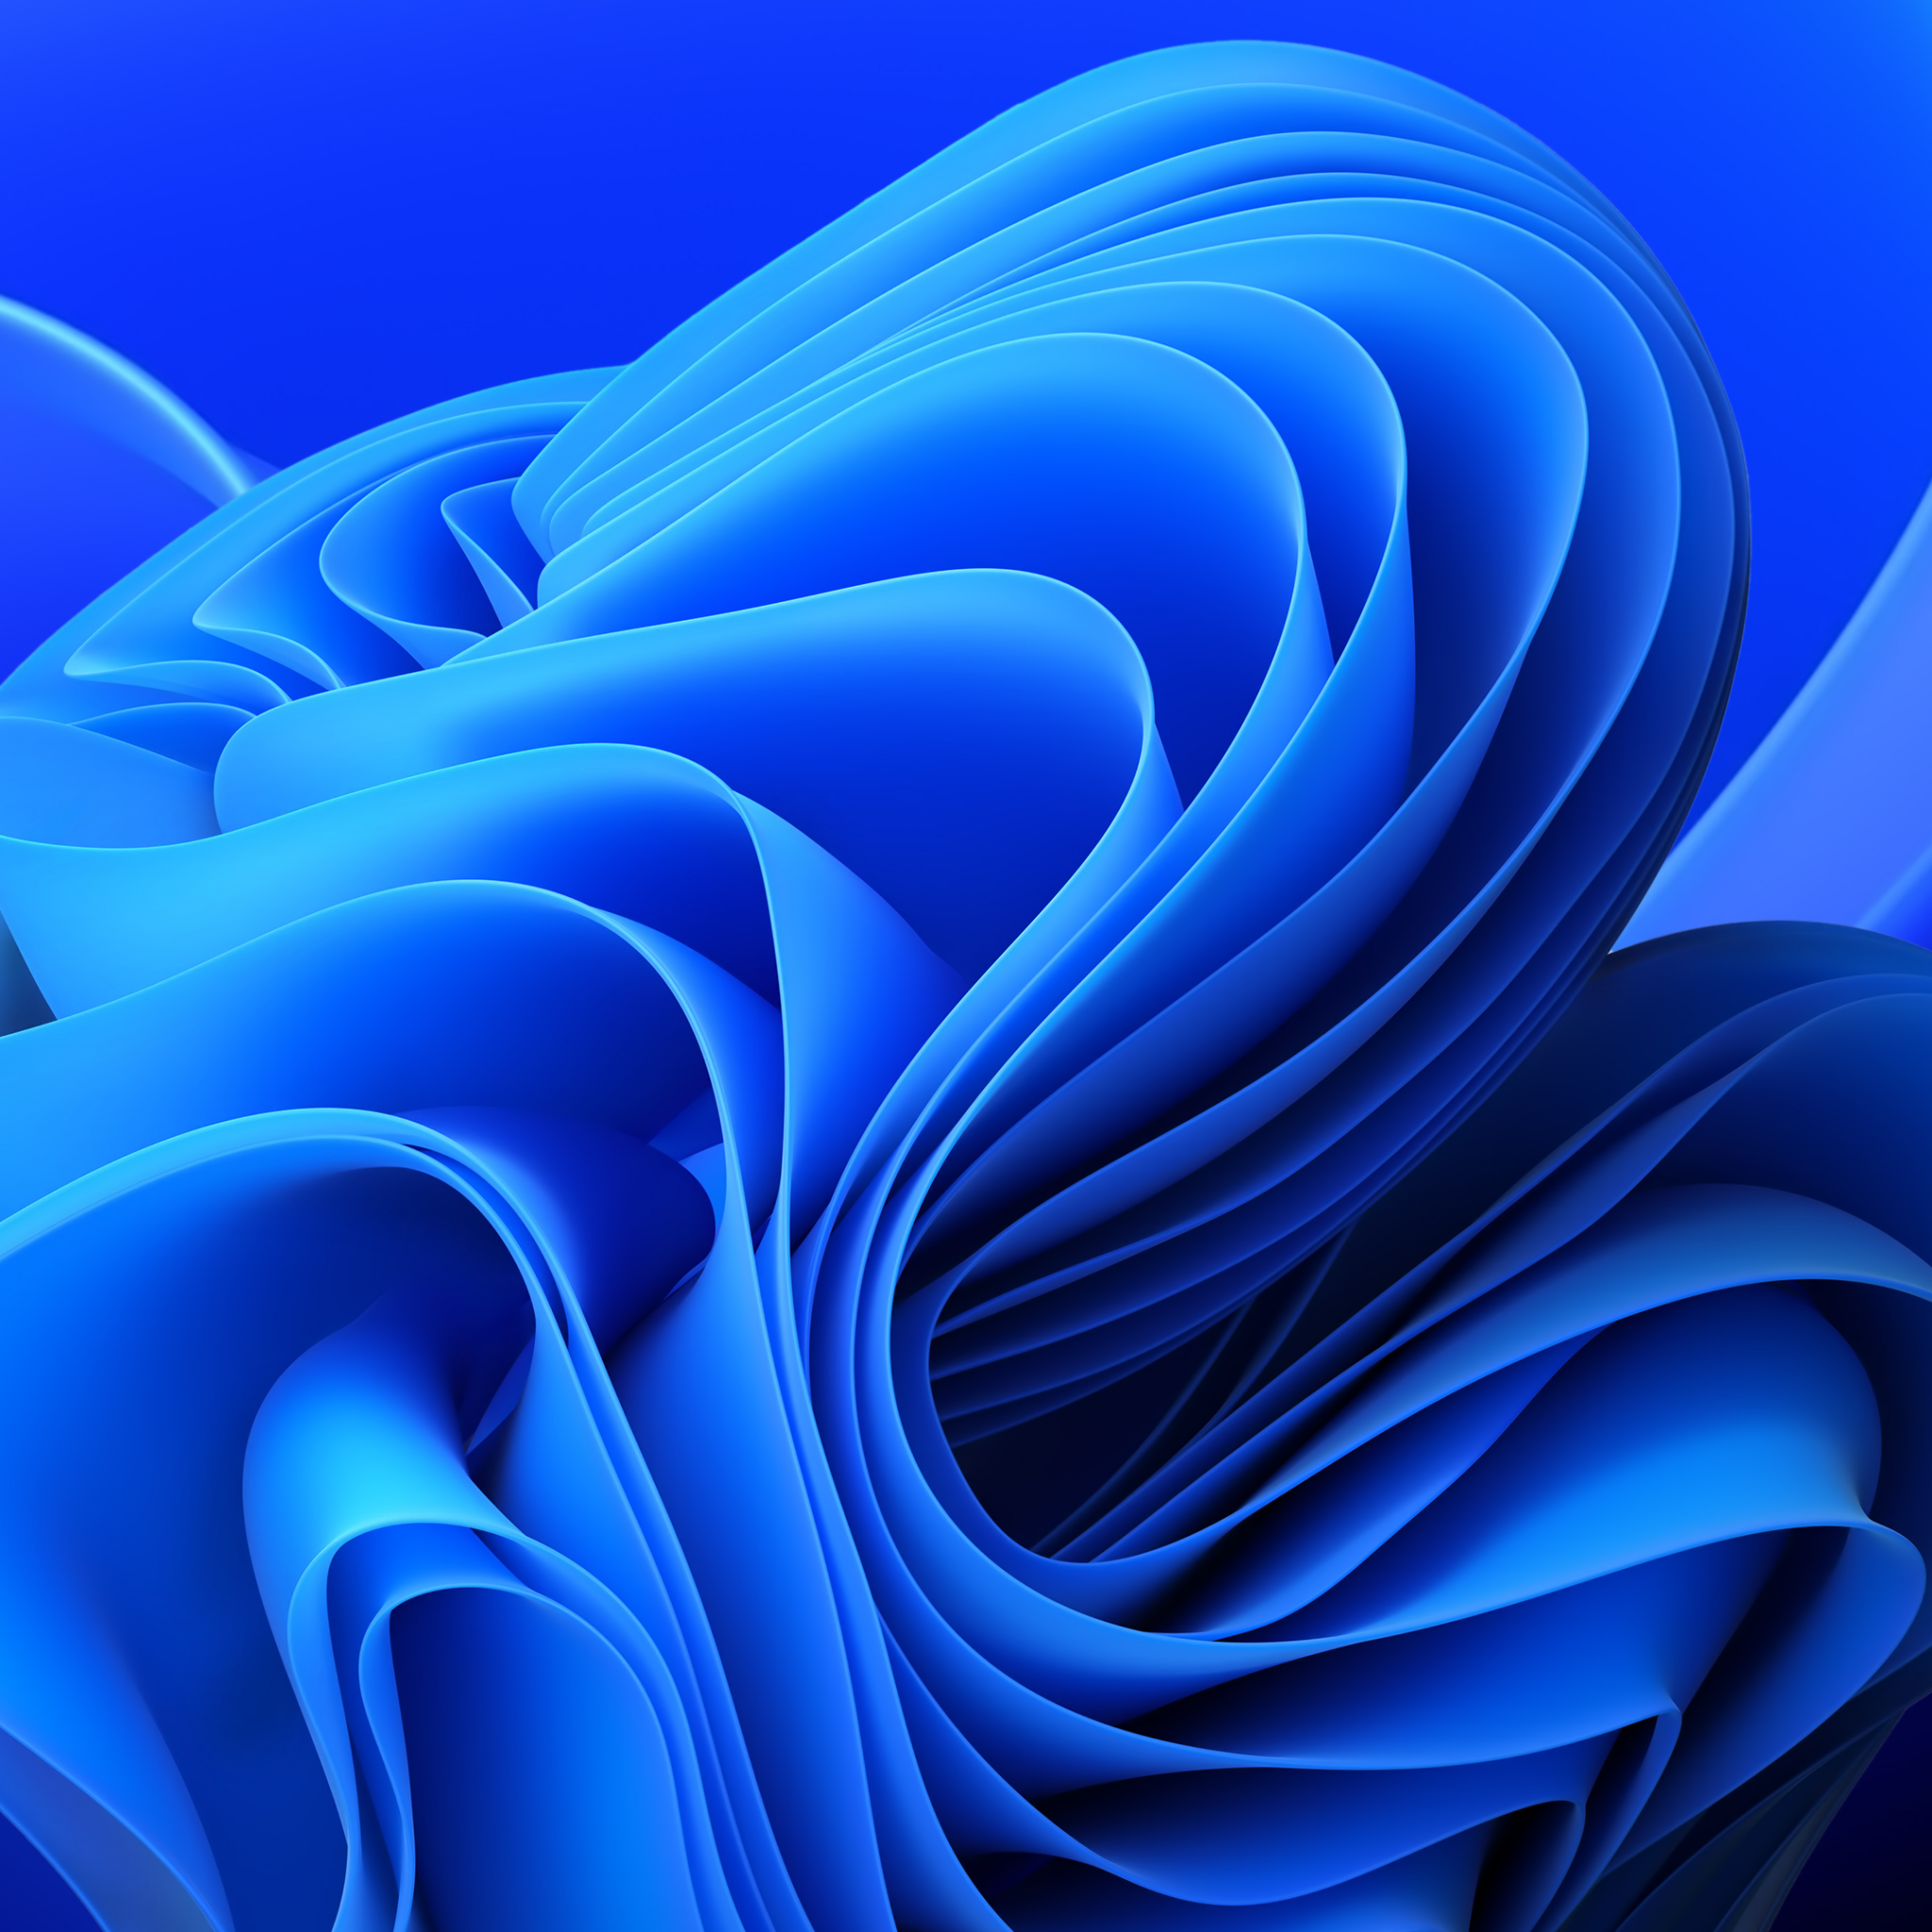 Windows 11 light blue abstract background 4K wallpaper download